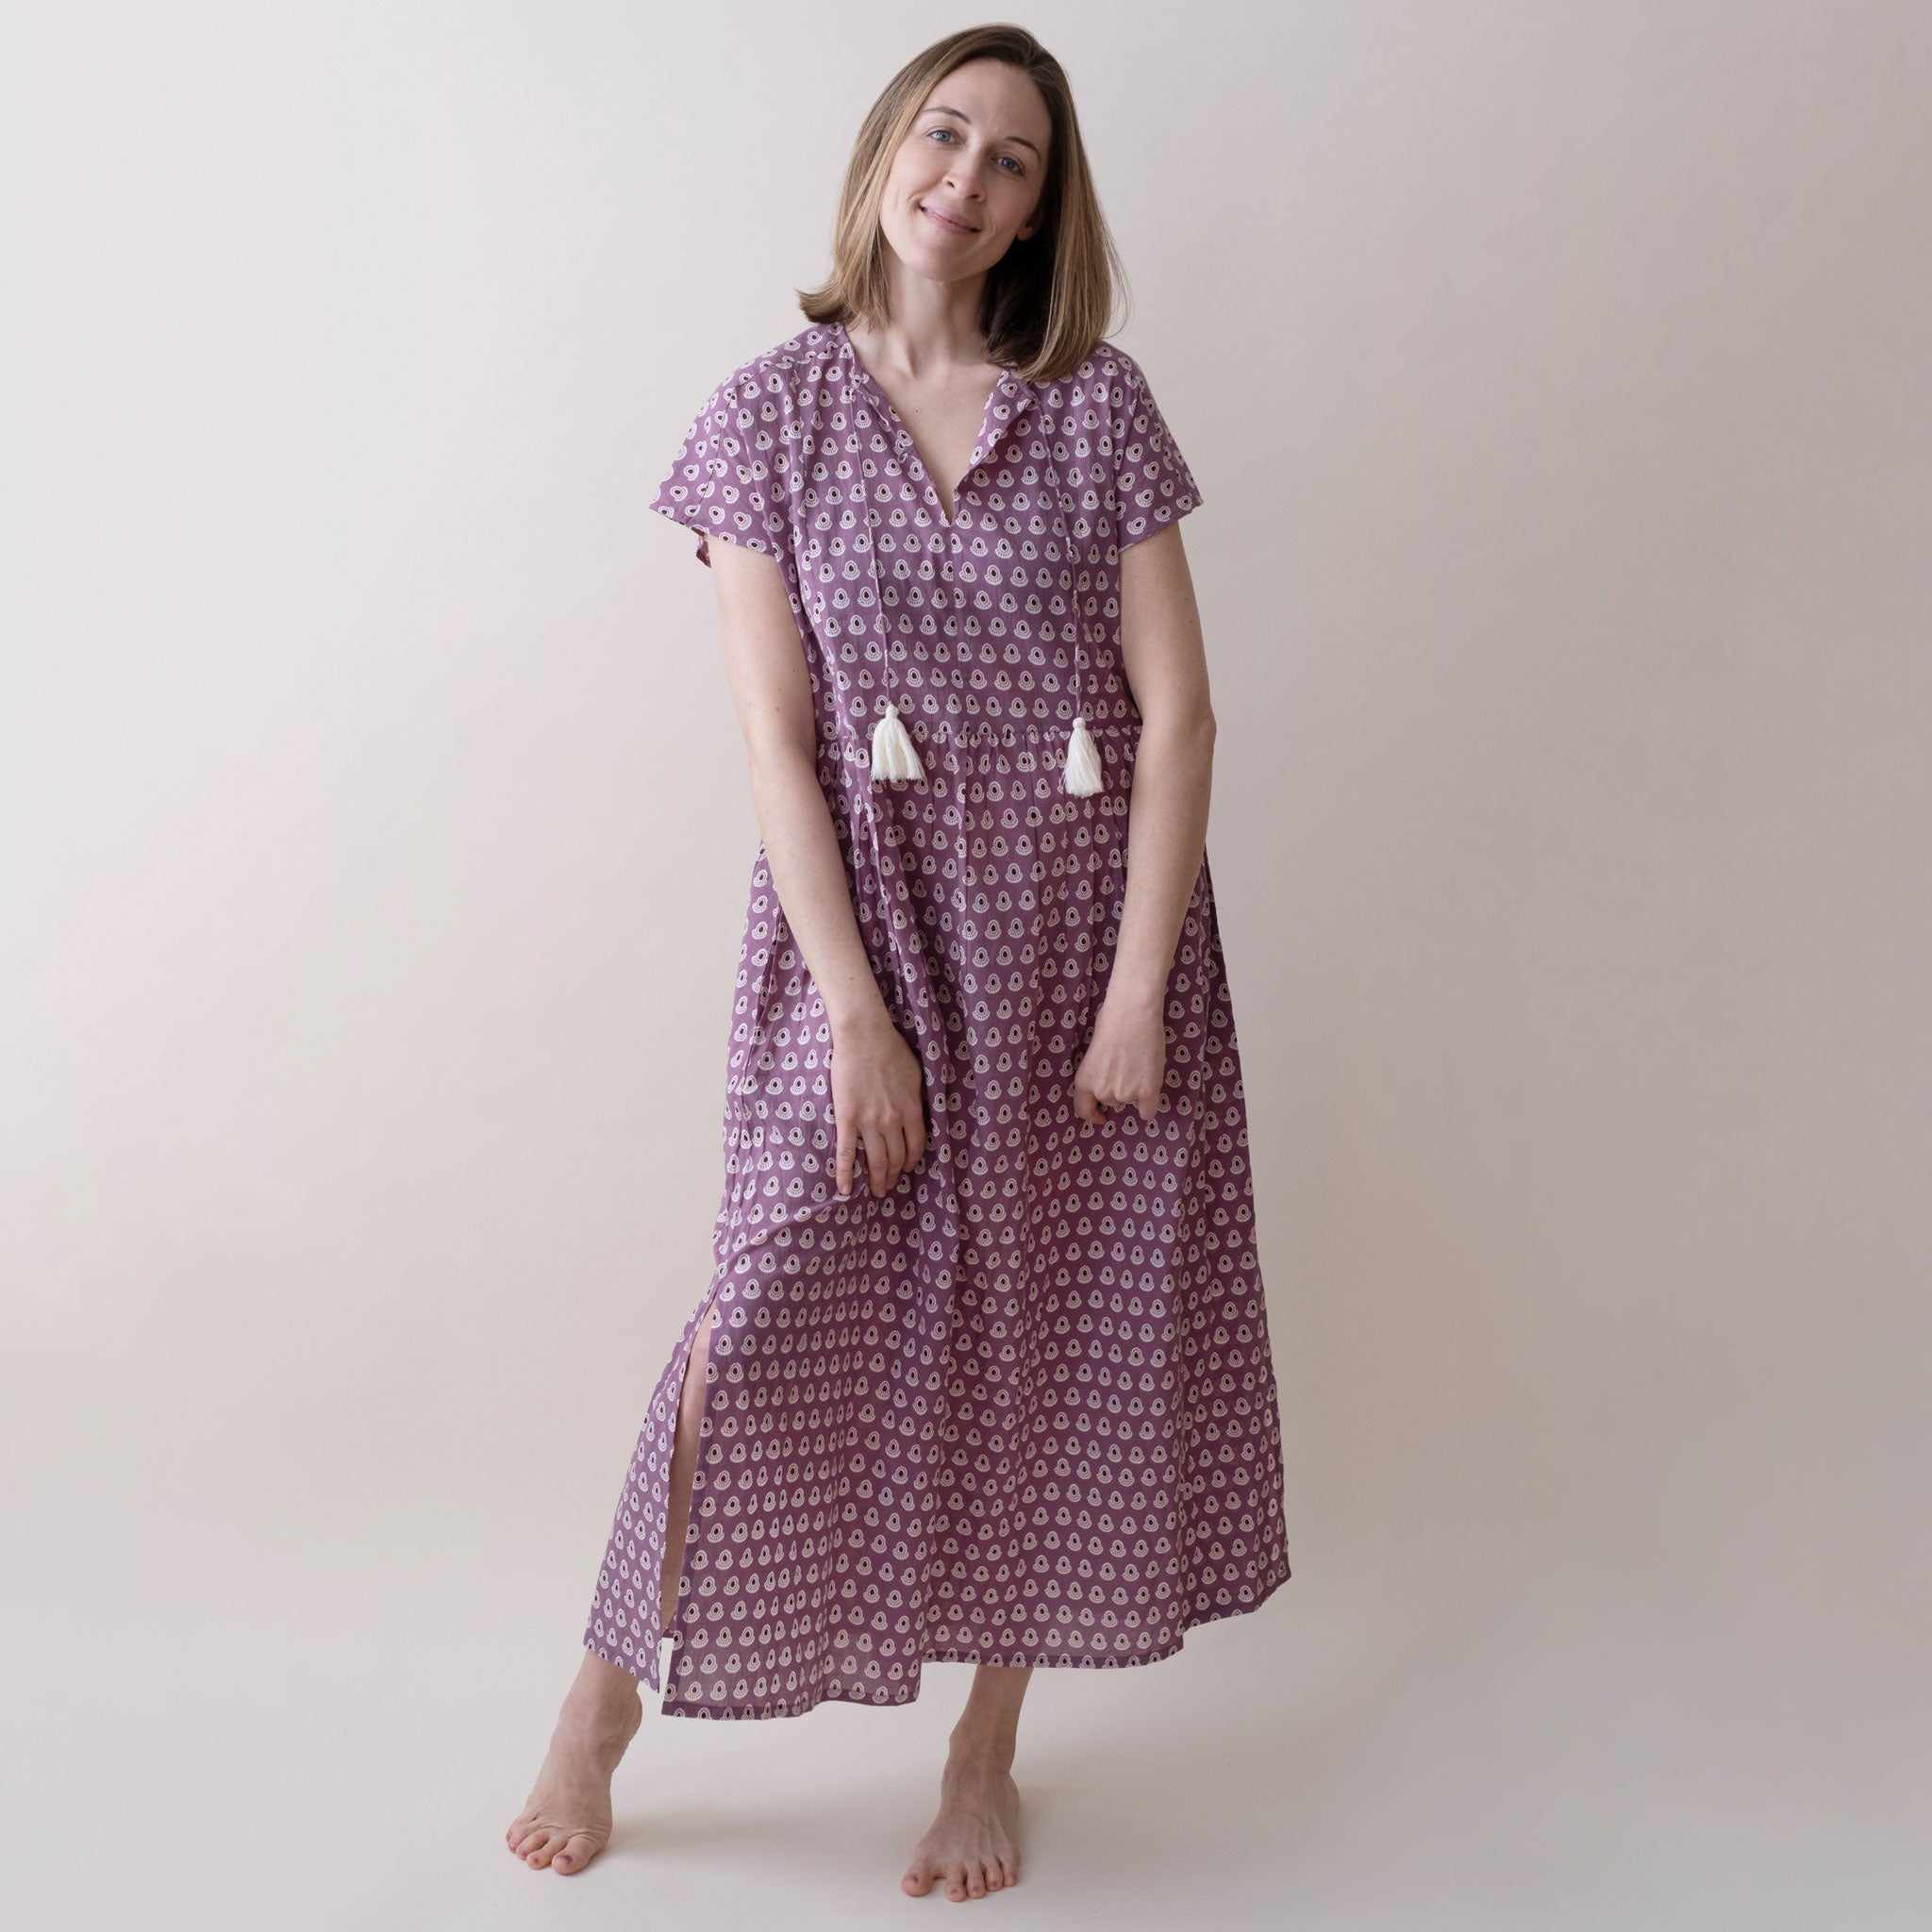 Meadow Dress- Lasko Raspberry